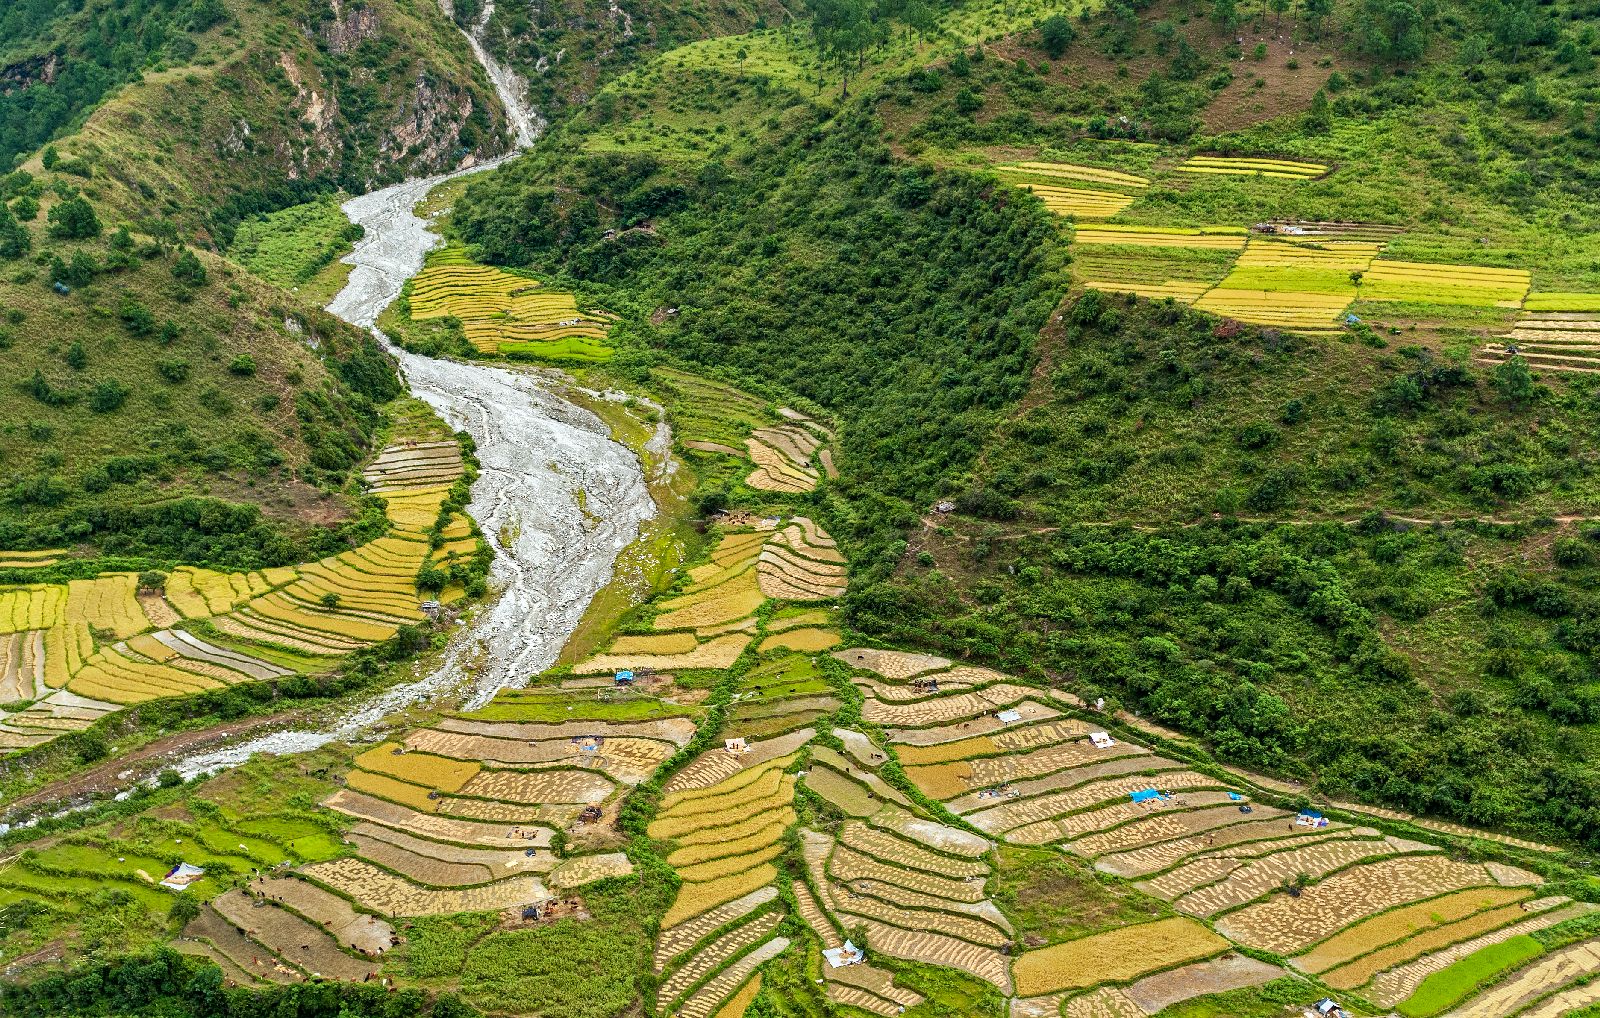 Aerial view of rice paddies in Bhutan